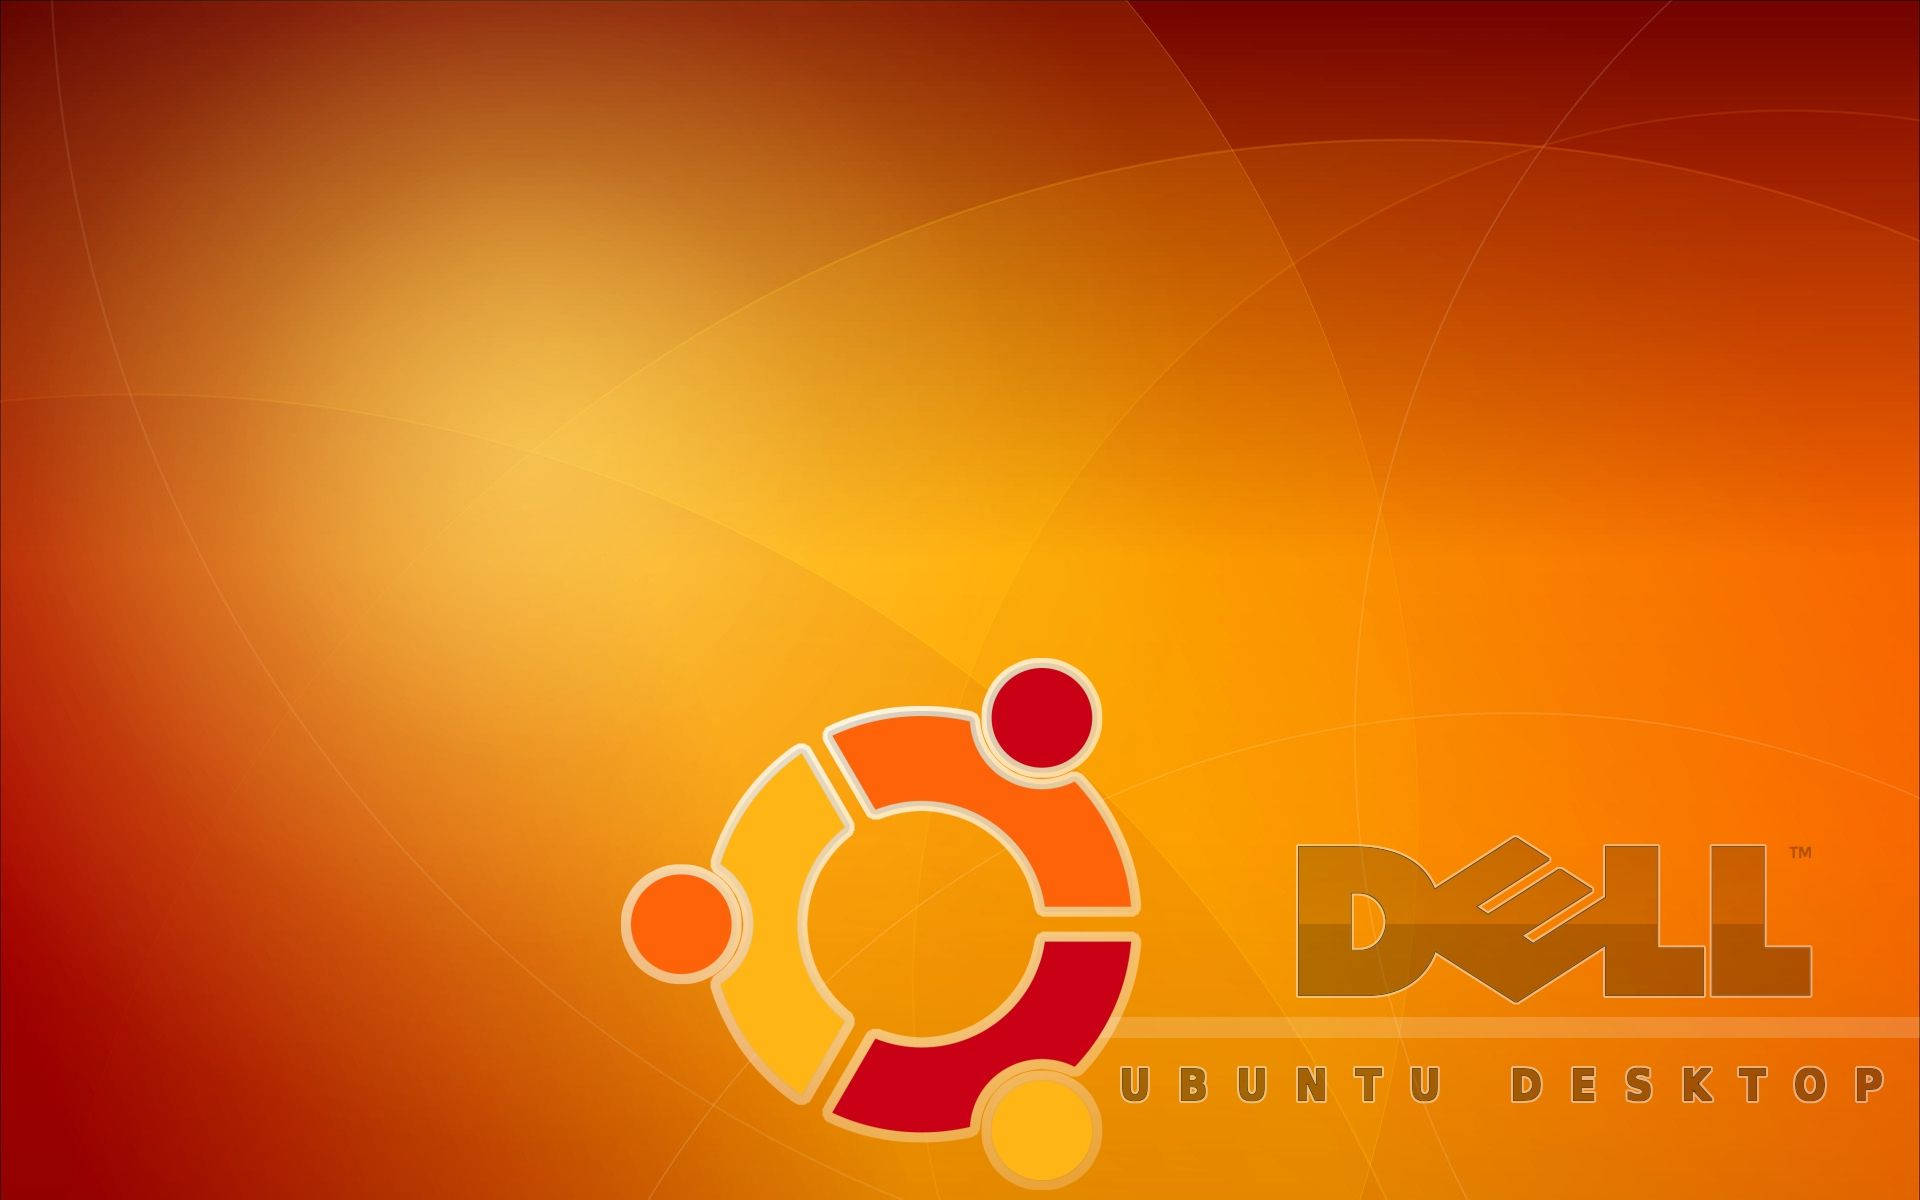 Dell X Ubuntu Desktop Wallpaper